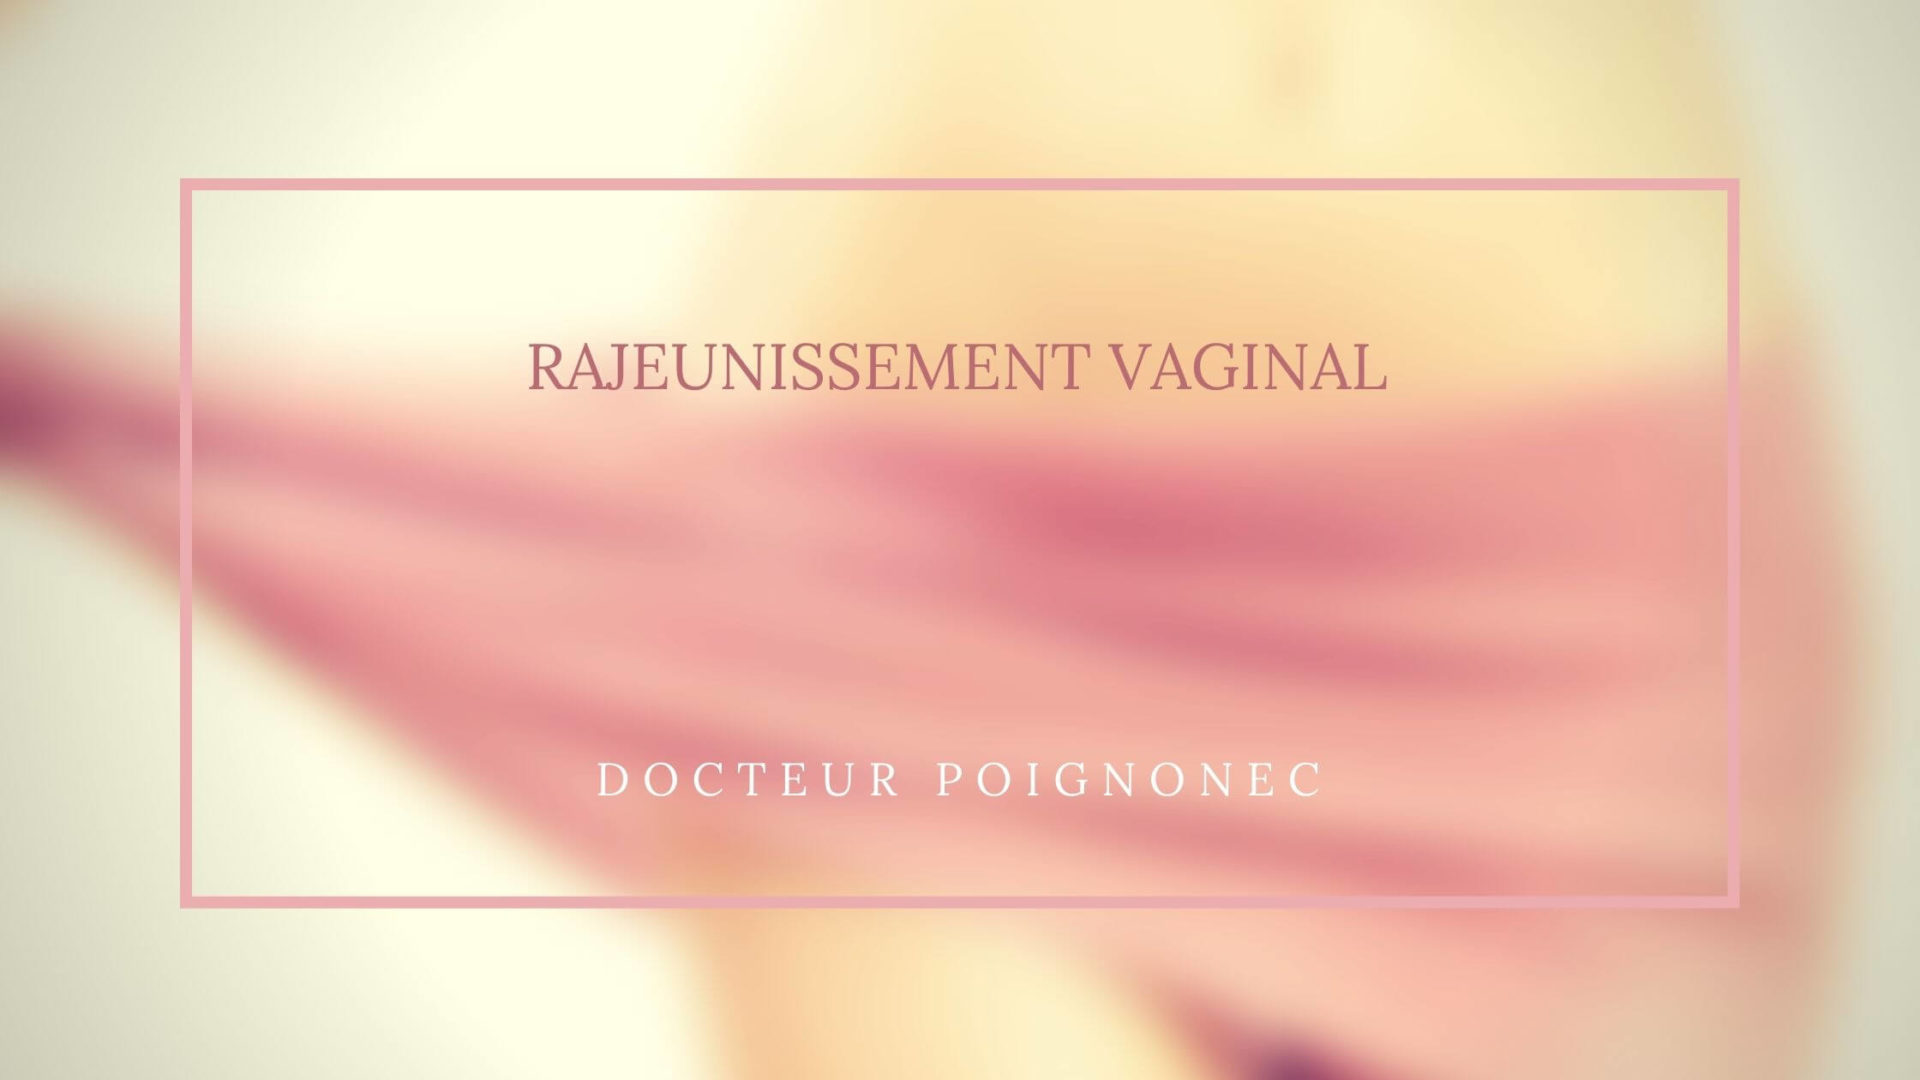 Rajeunissement vaginal